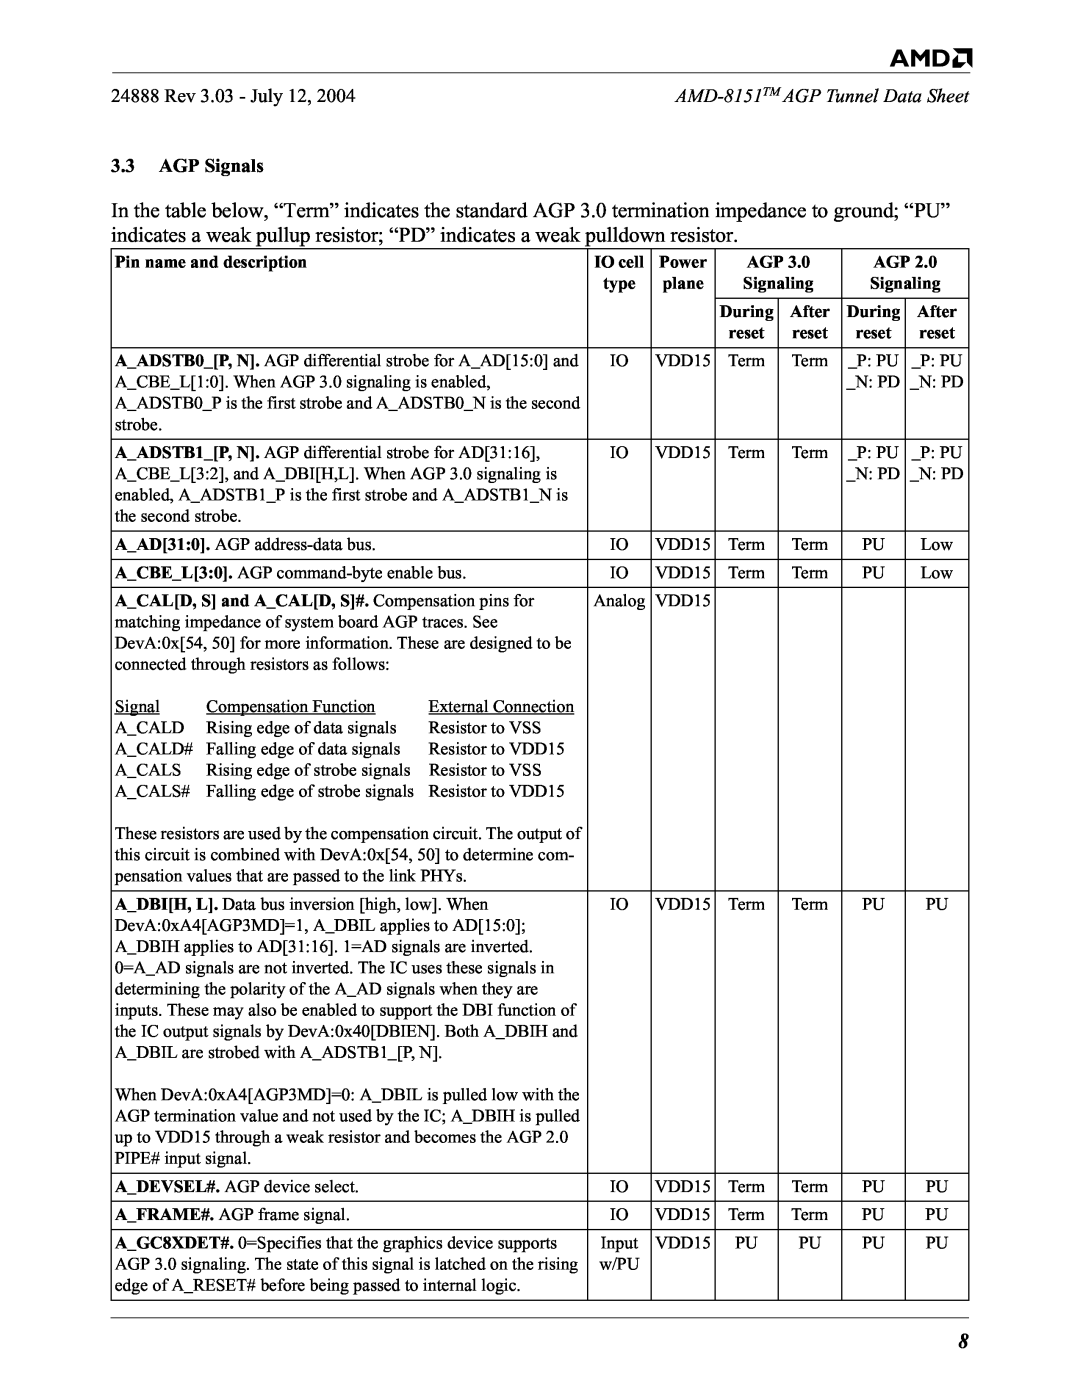 AMD specifications Rev 3.03 - July, 3.3AGP Signals, AMD-8151TM AGP Tunnel Data Sheet 